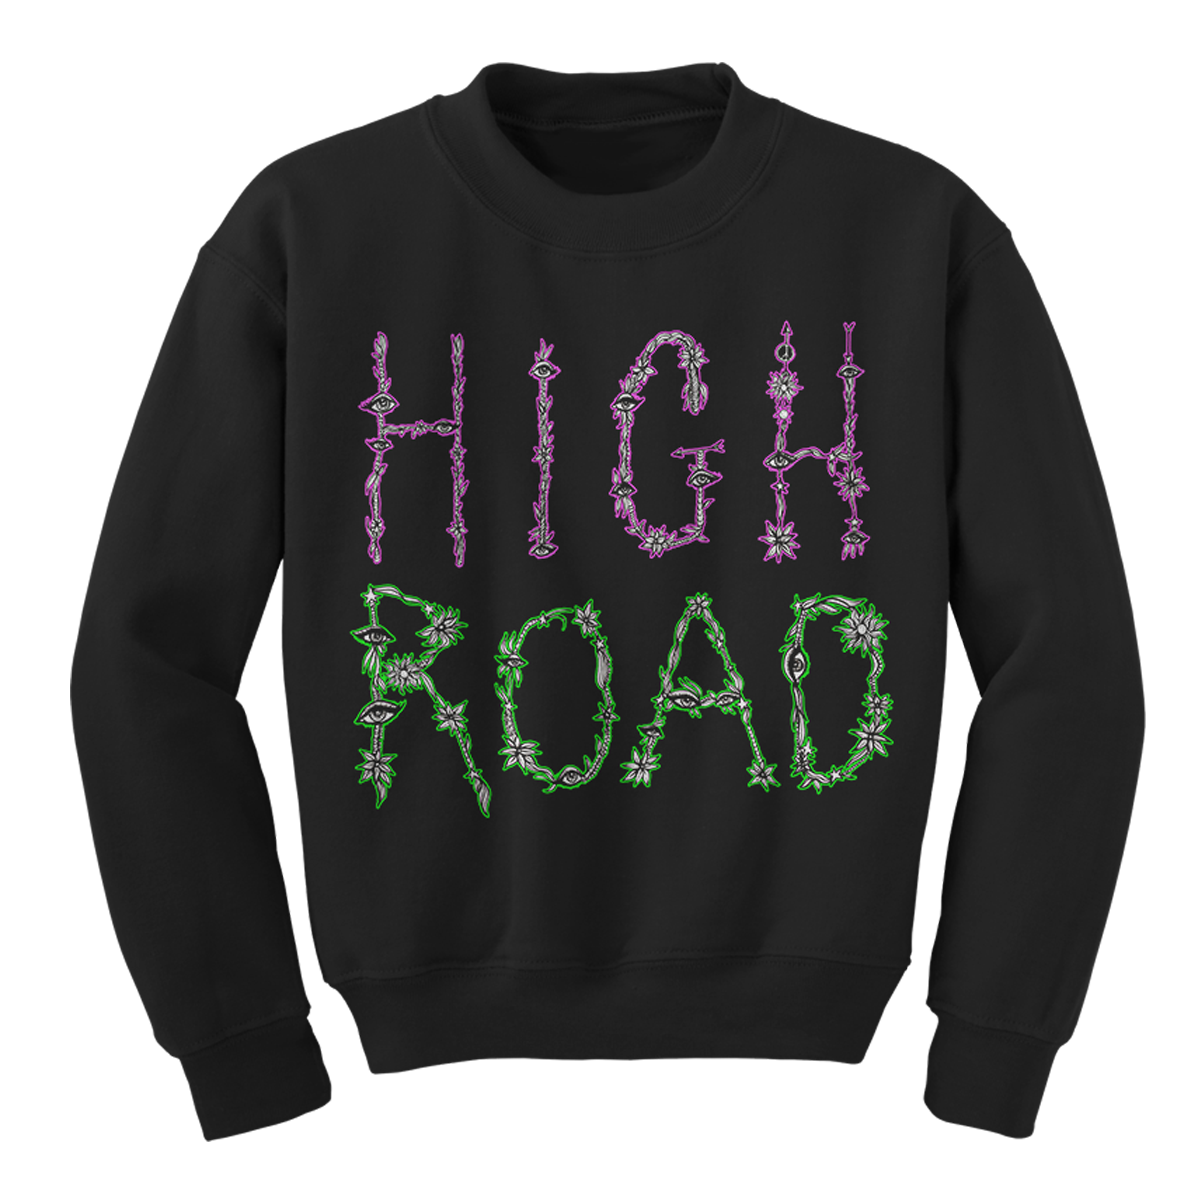 High Road Crewneck Sweatshirt